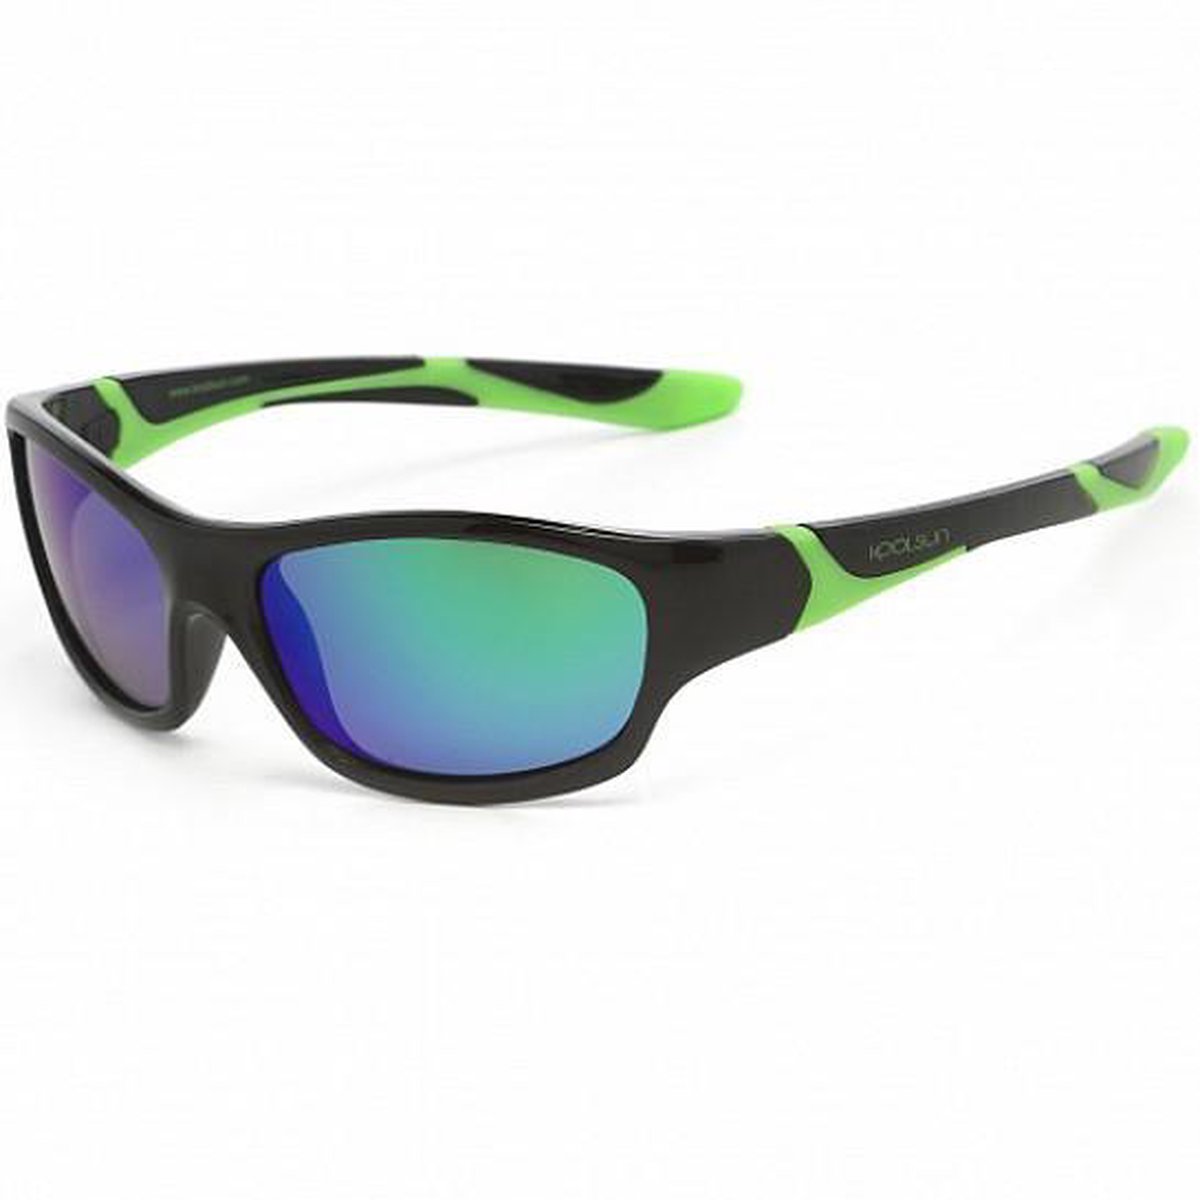 KOOLSUN - Sport - Kinder zonnebril - Black Lime - 3-8 jaar - UV400 - Categorie 3